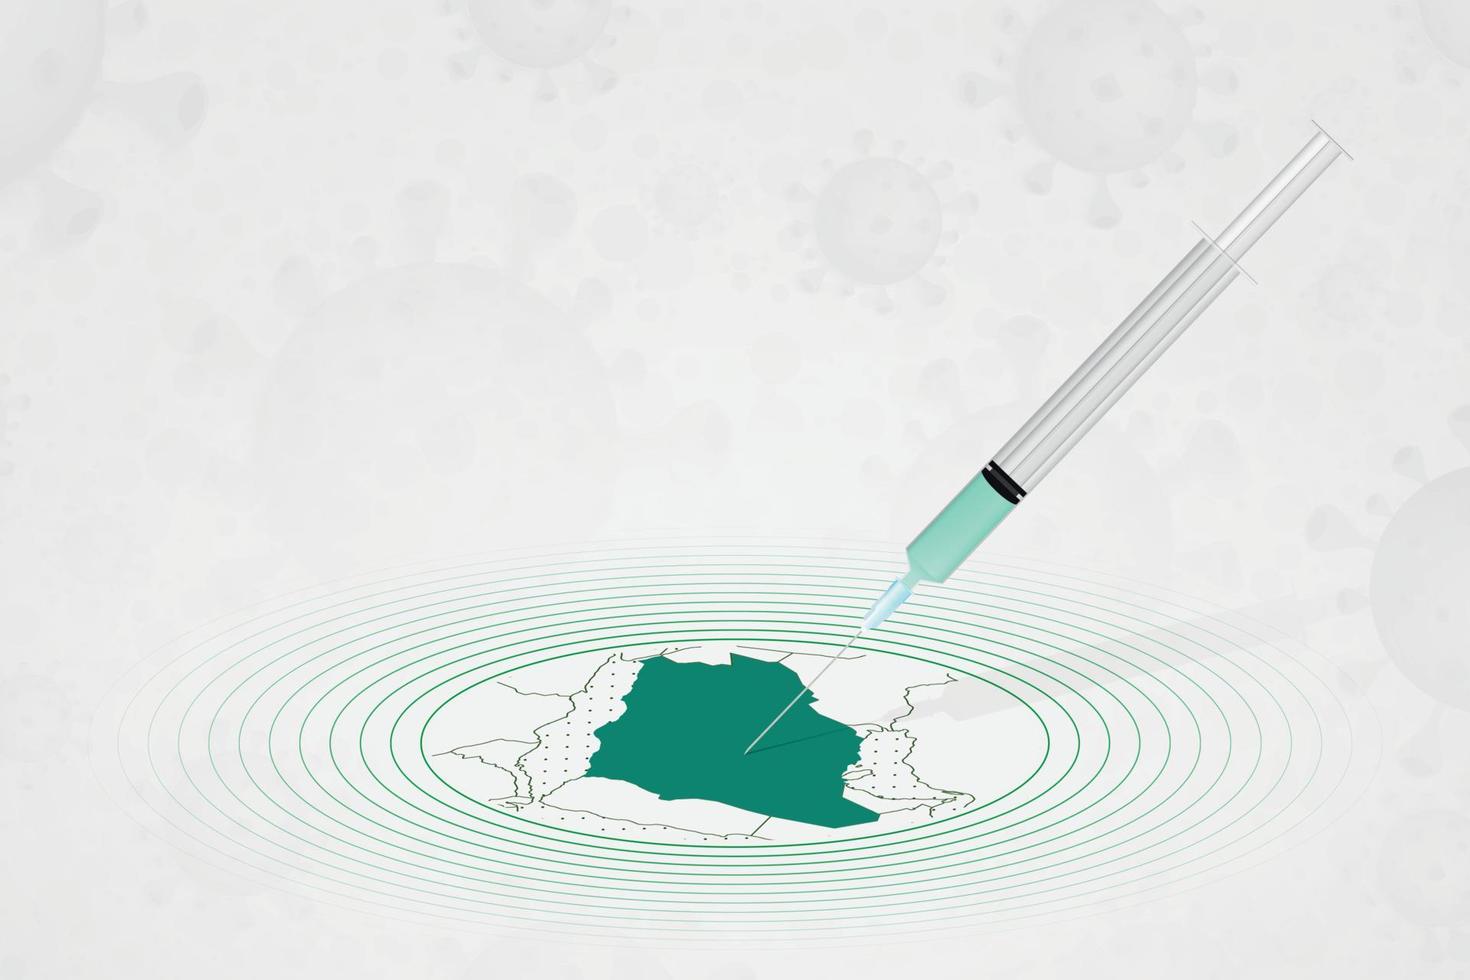 saudi-arabien-impfungskonzept, impfstoffinjektion in karte von saudi-arabien. impfstoff und impfung gegen coronavirus, covid-19. vektor